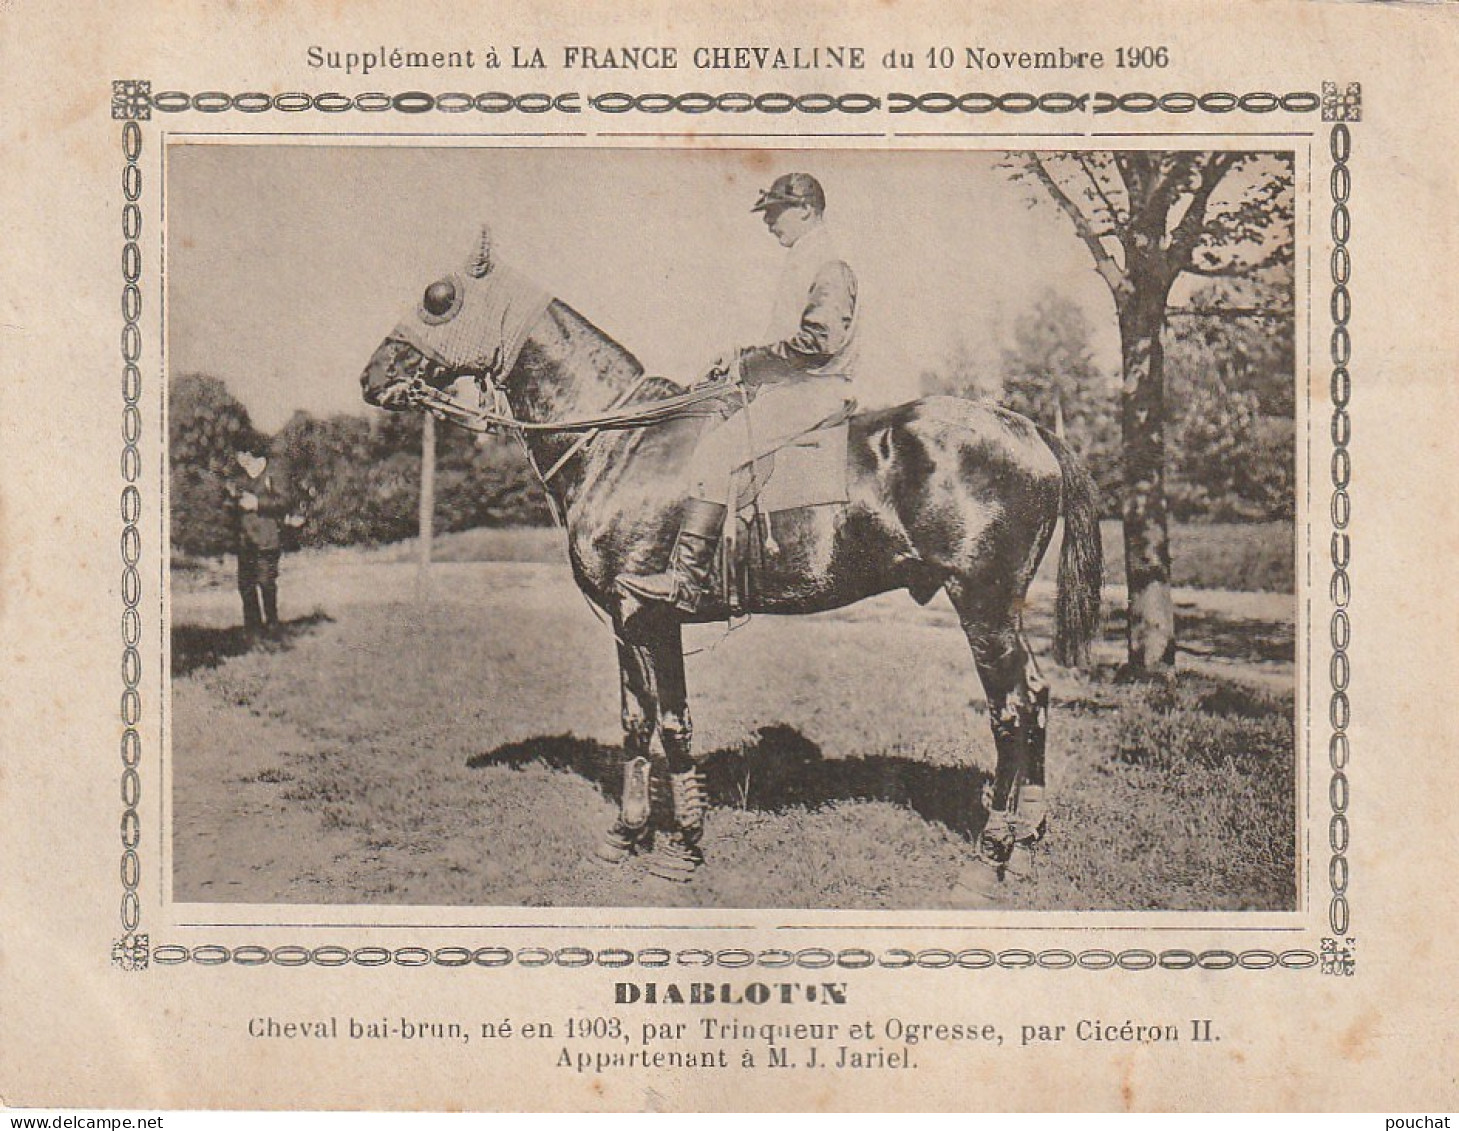 AA+ - " DIABLOTIN " - CHEVAL BAI  BRUN APPARTENANT A M. J. JARIEL - SUPPL. FRANCE CHEVALINE  NOVEMBRE 1906 - Horse Show